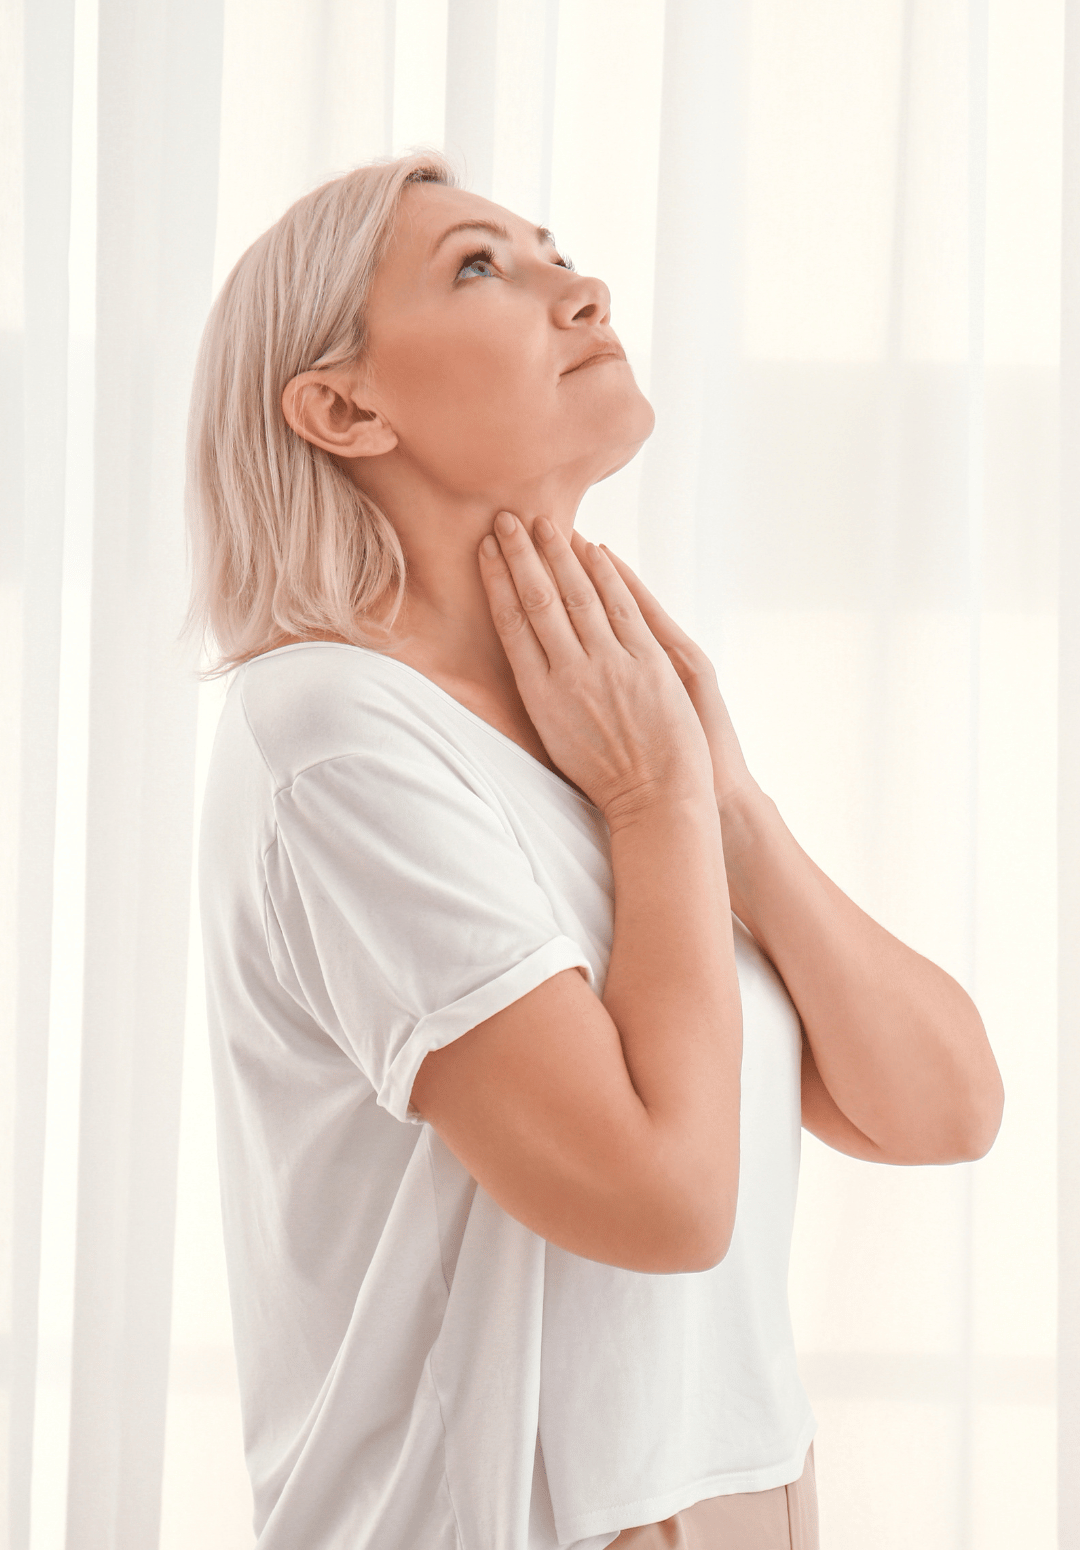 thyroid condition symptoms